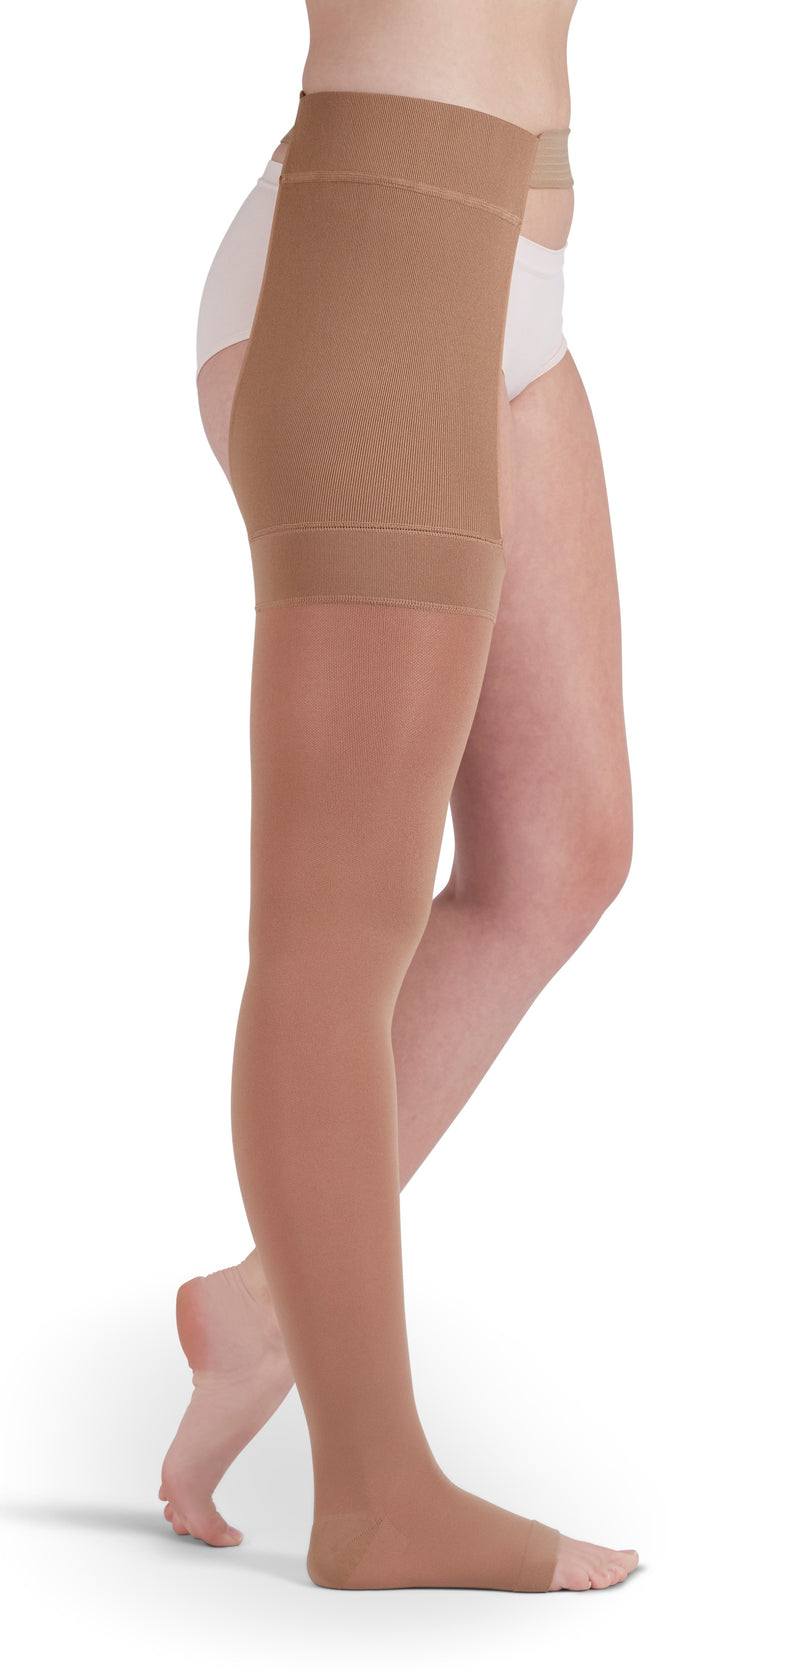 mediven plus 30-40 mmHg Thigh High w/Attachment Open Toe Compression Stockings (Right), I-Standard